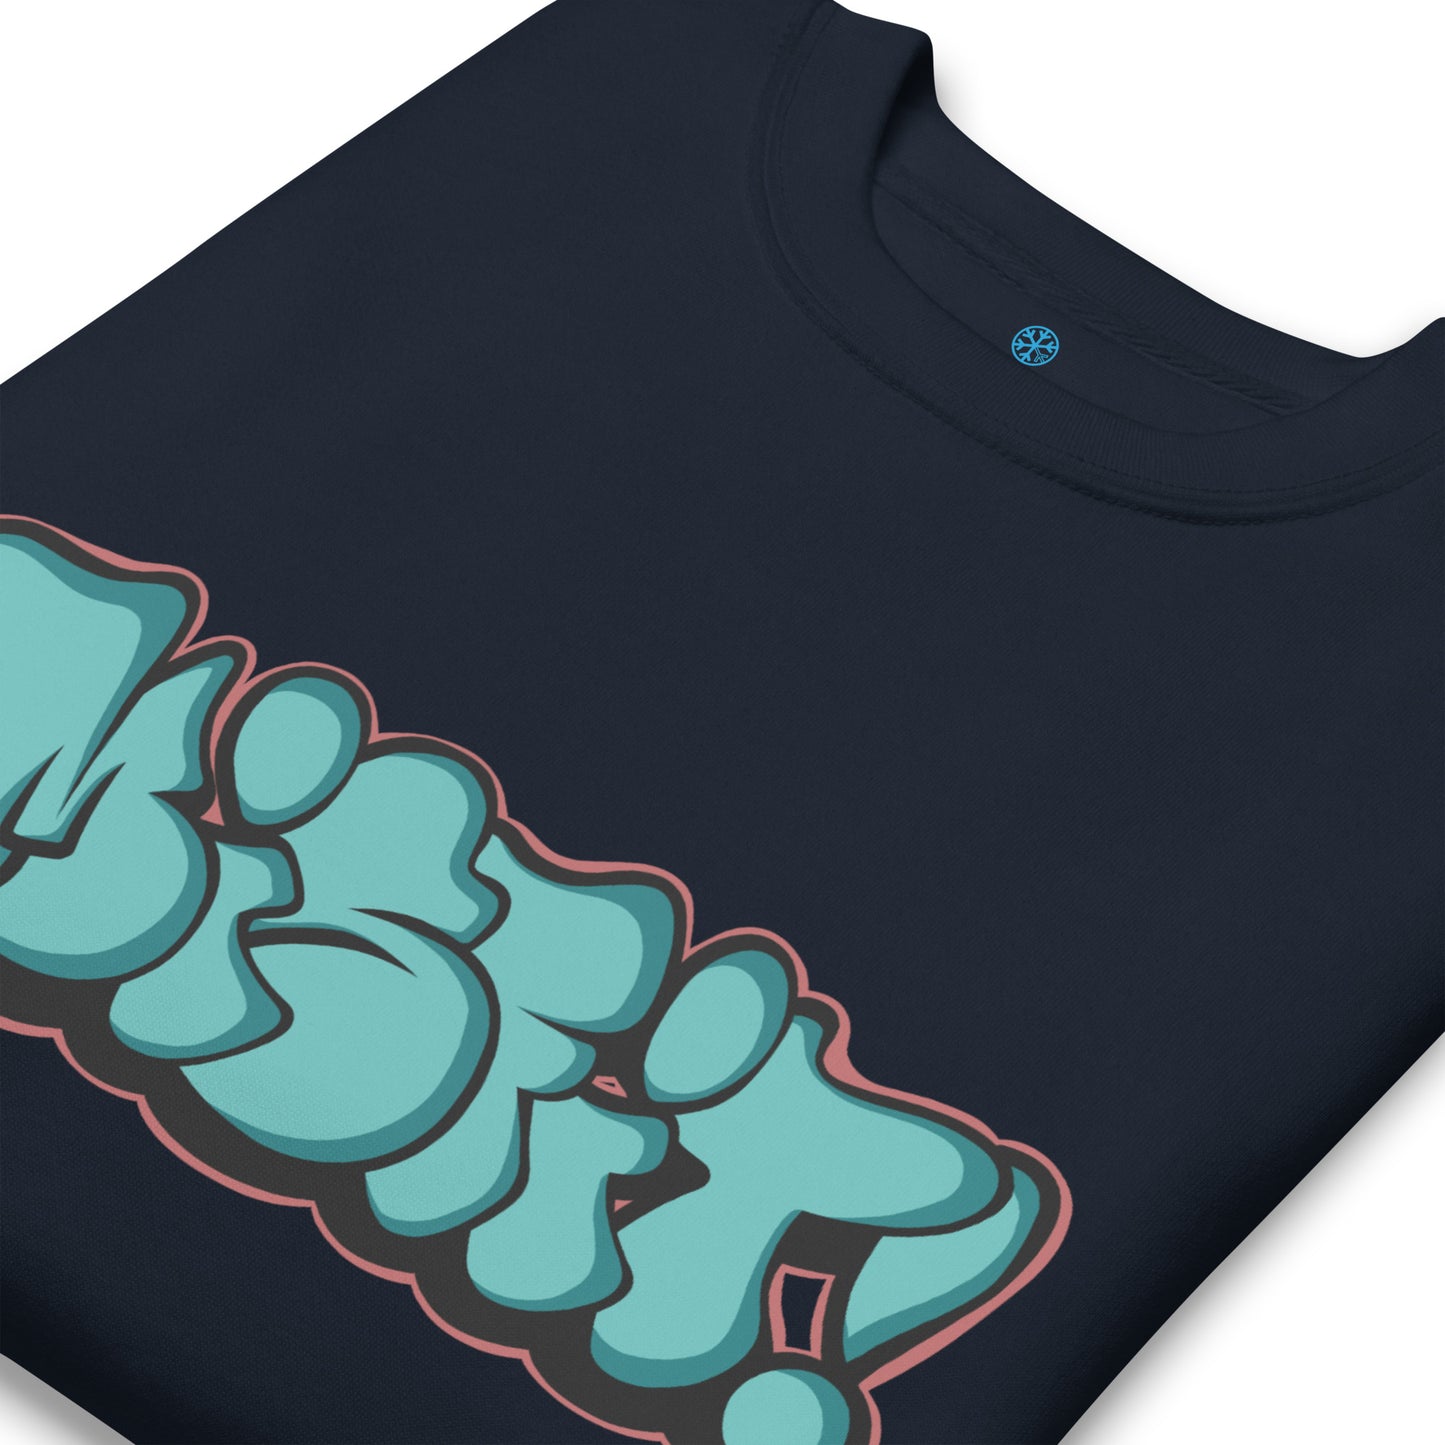 detail of Misfit sweatshirt by B.Different Clothing street art graffiti inspired streetwear brand